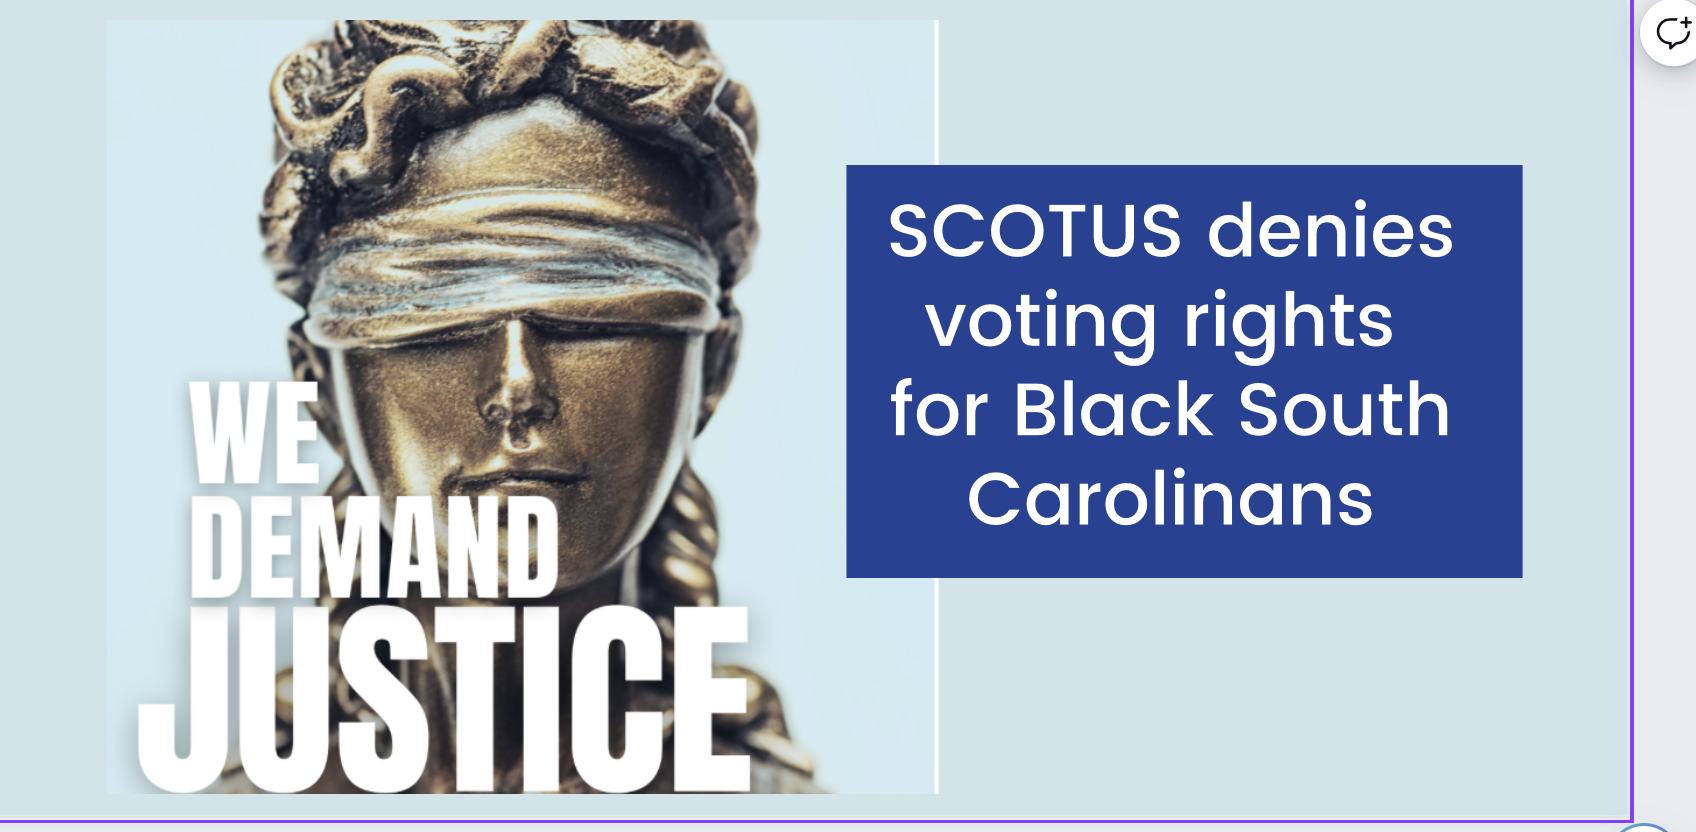 SCOTUS denies voting rights for Black South Carolinians